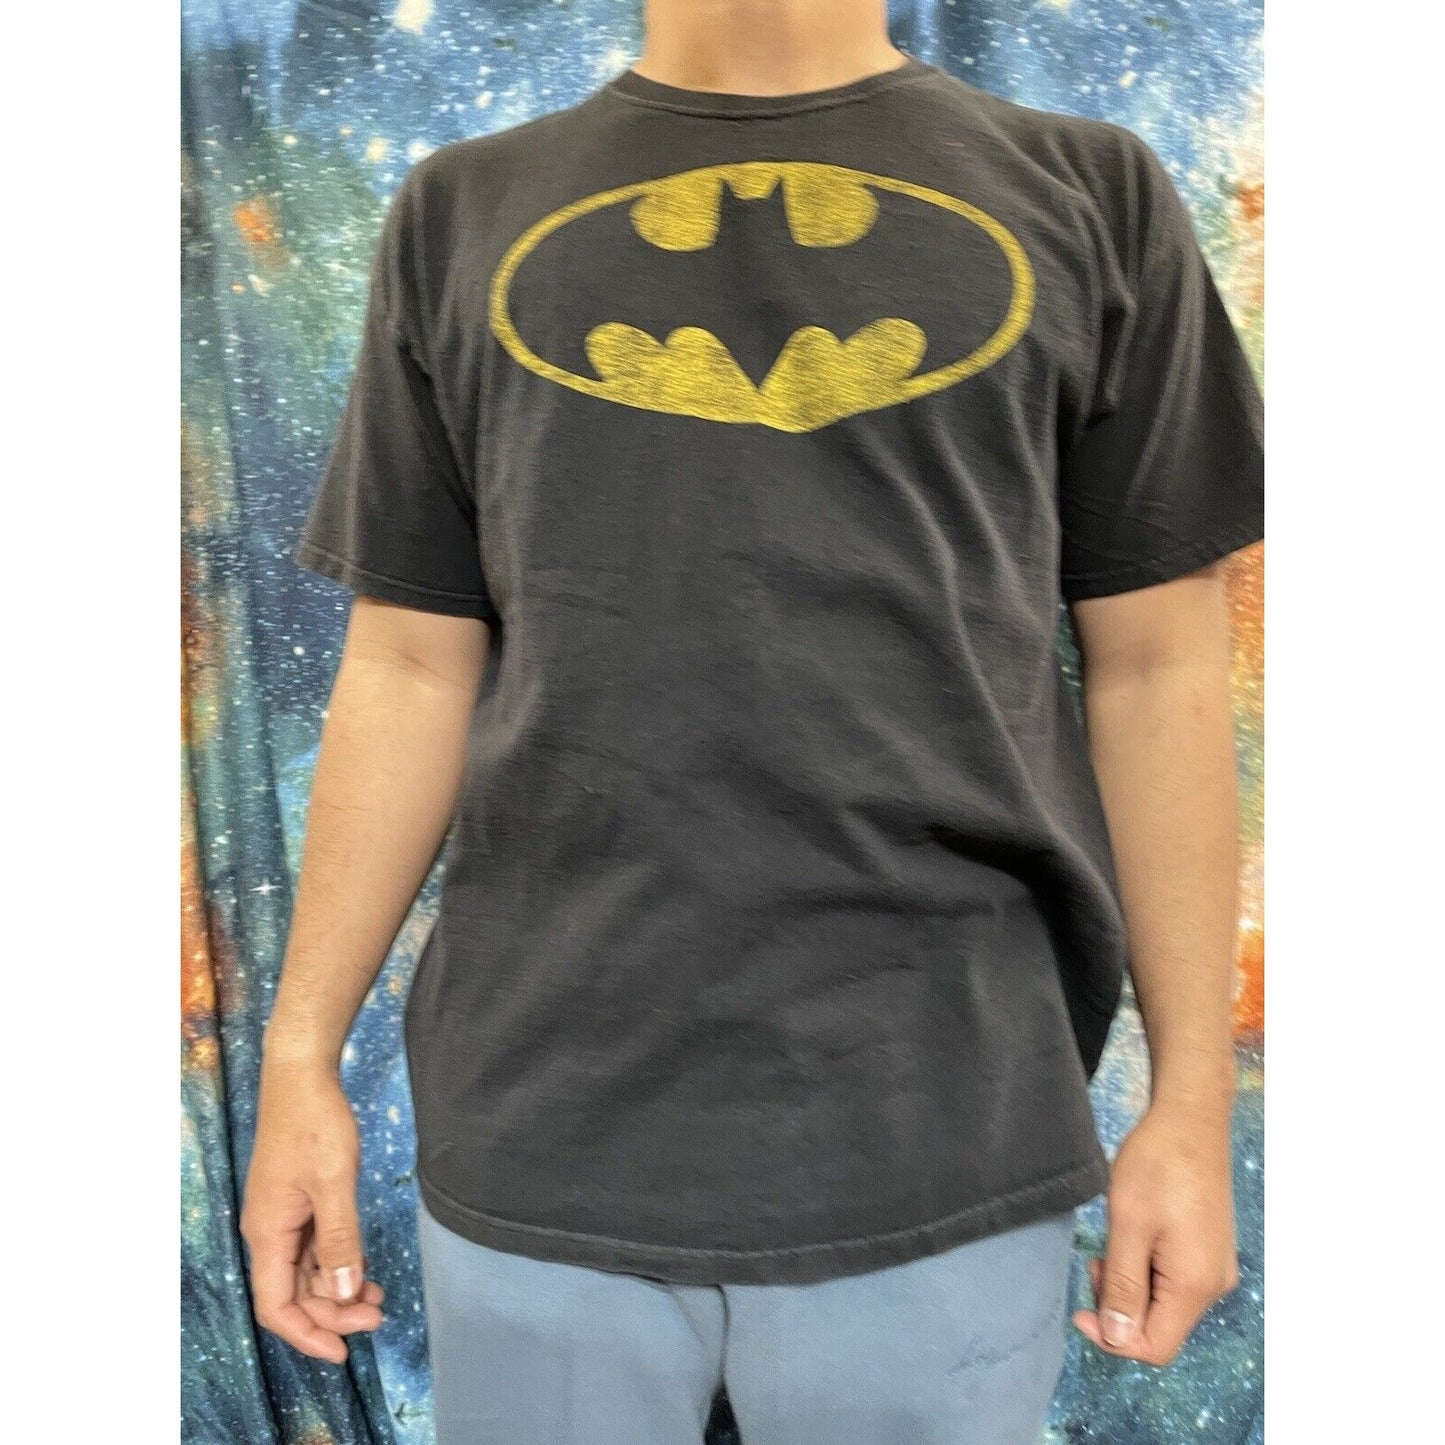 Batman Black XL Cotton T-shirt short sleeve Yellow logo